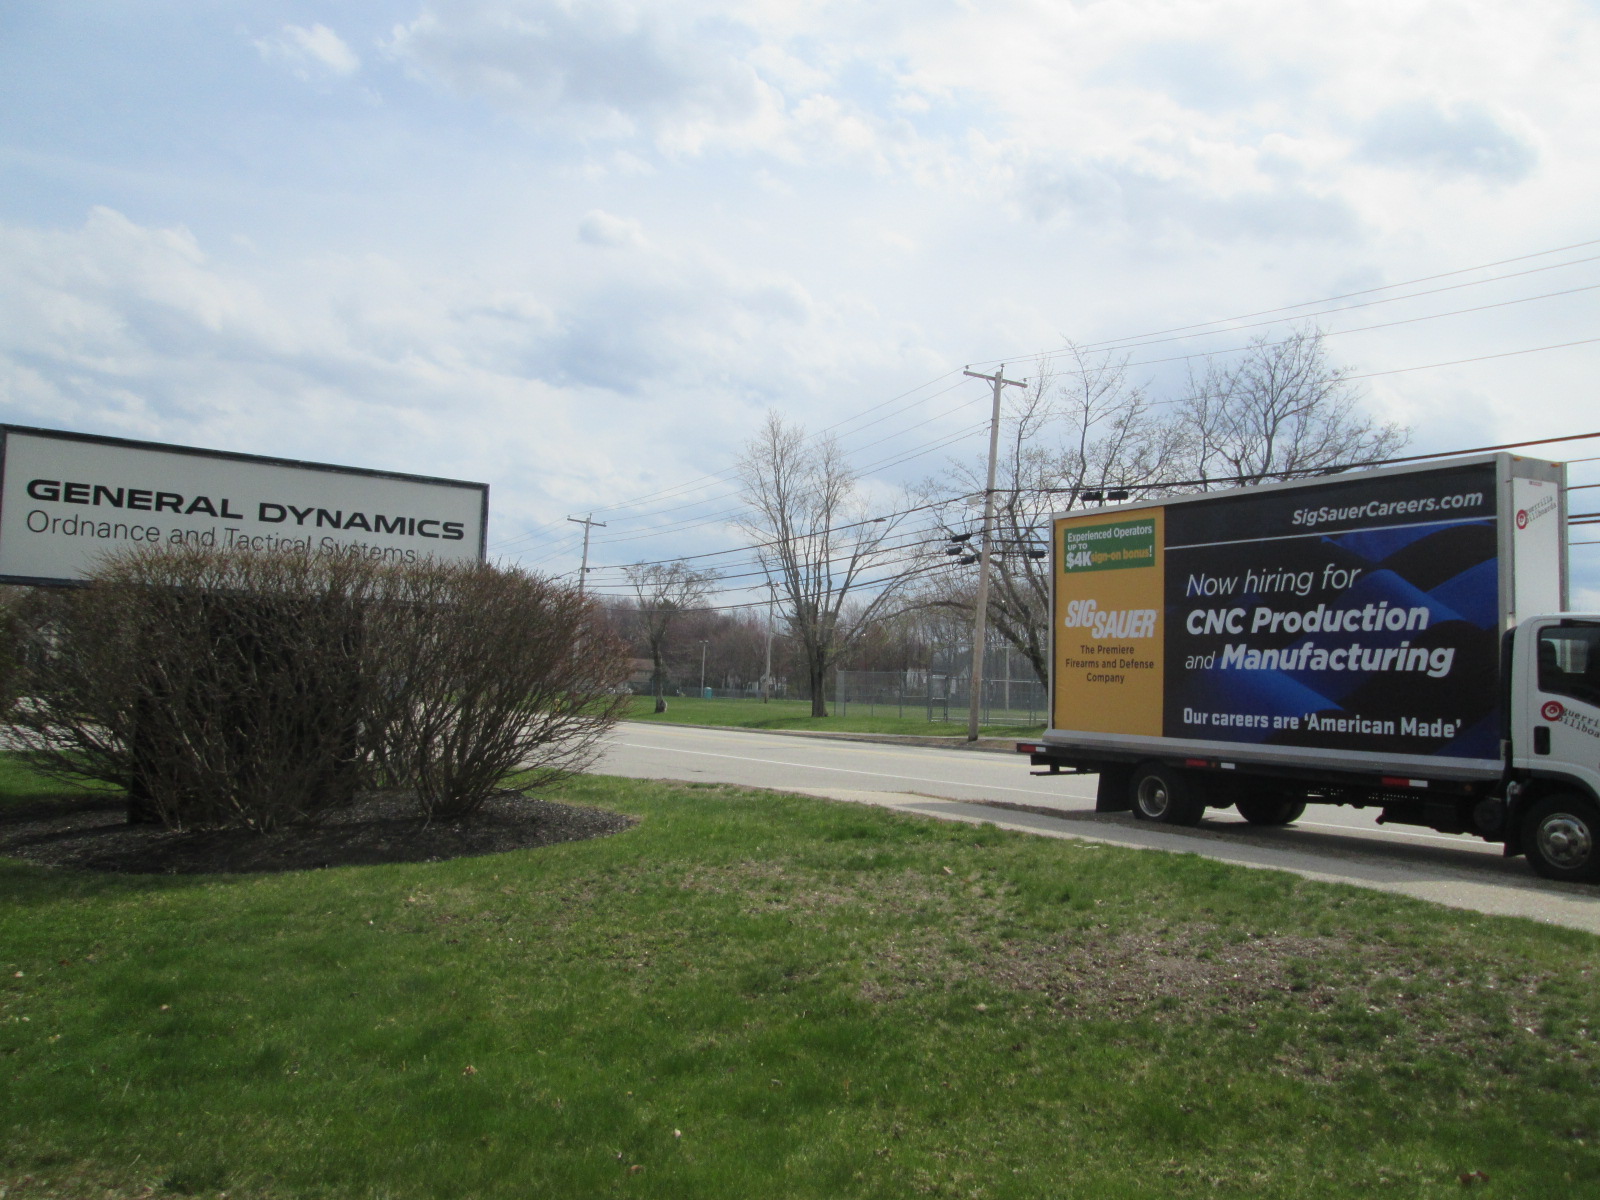 Employee recruting billboard truck ad in Southern Maine